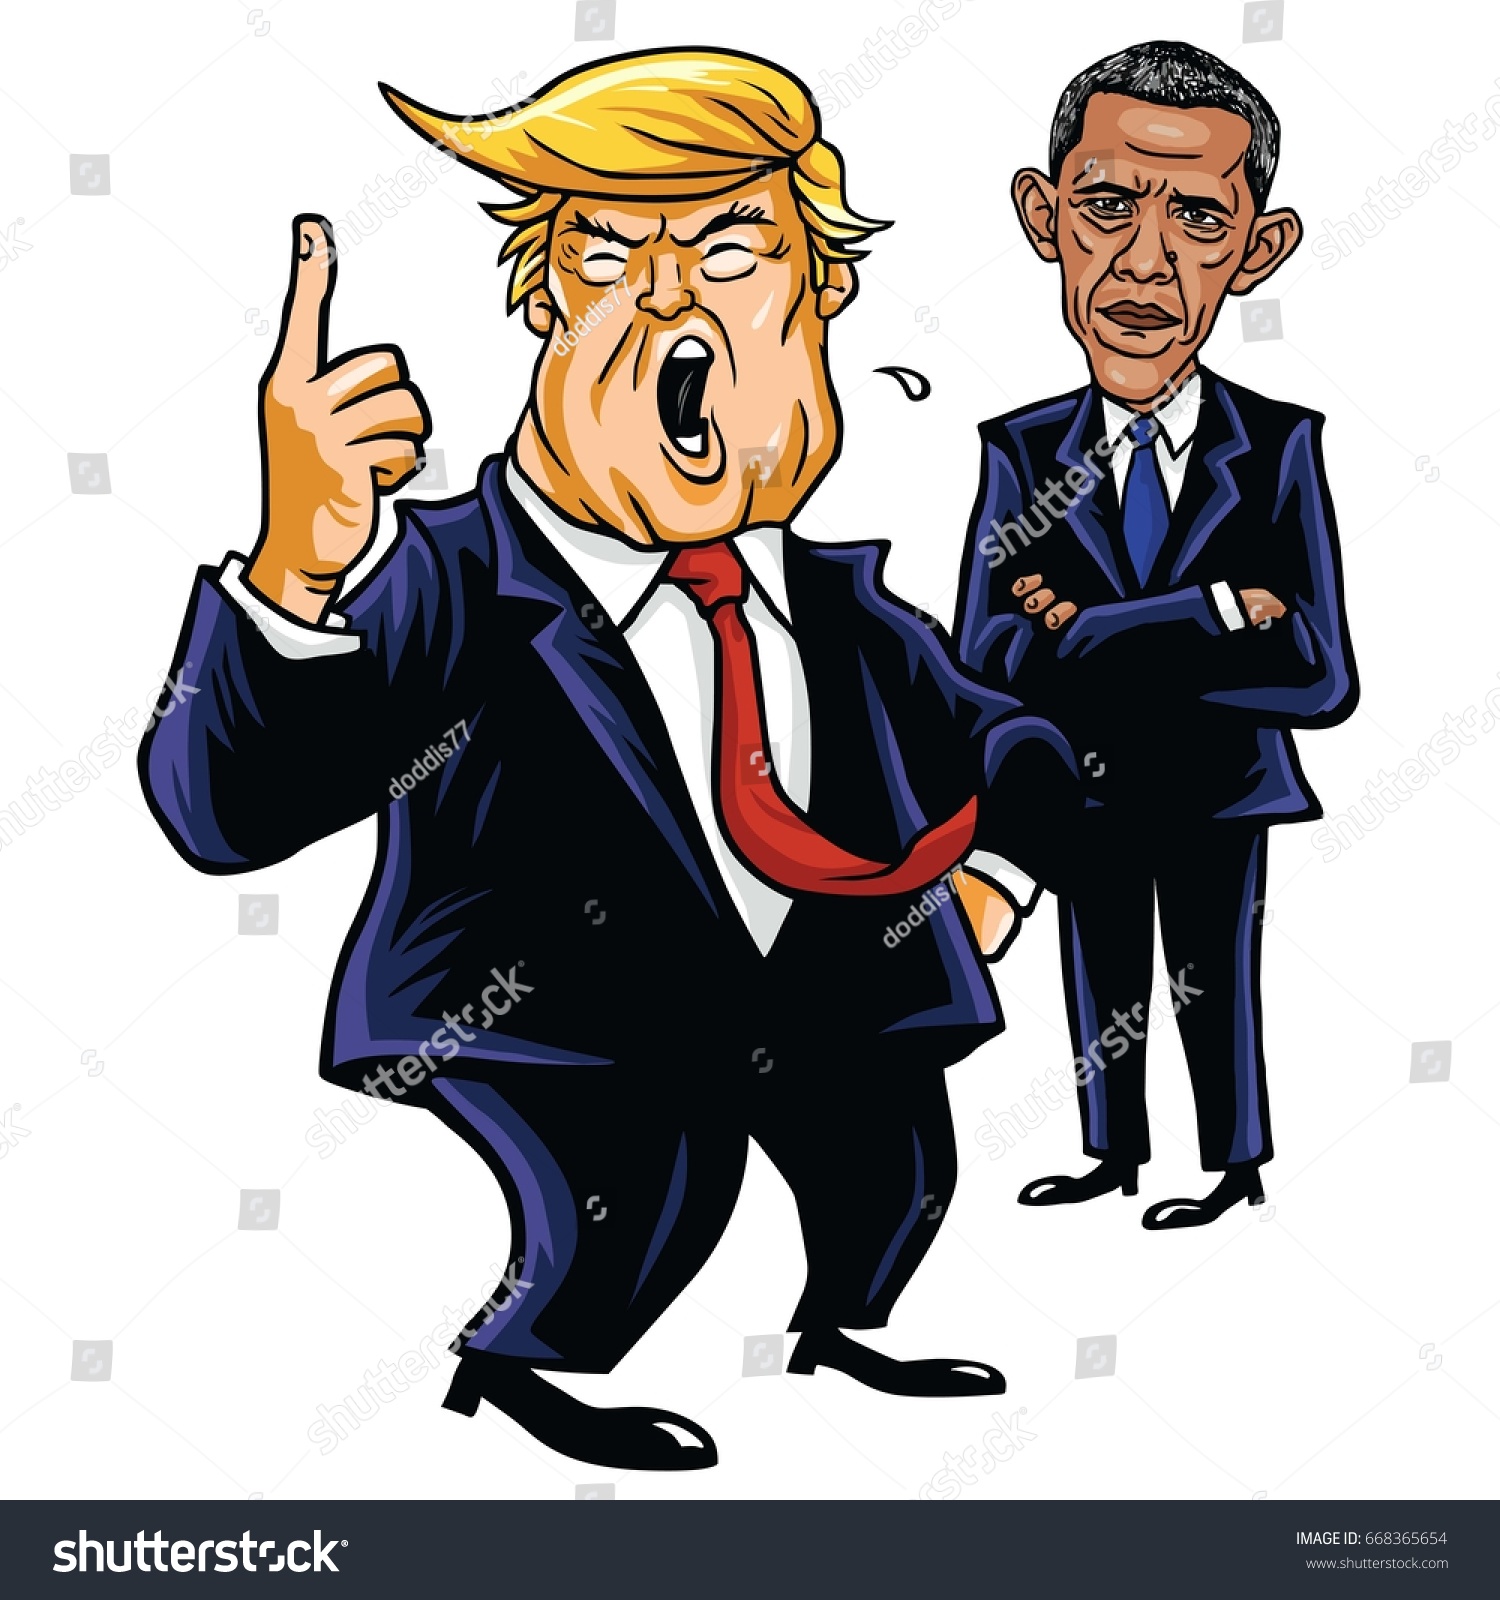 Donald Trump Barack Obama Cartoon Caricature のベクター画像素材 ロイヤリティフリー